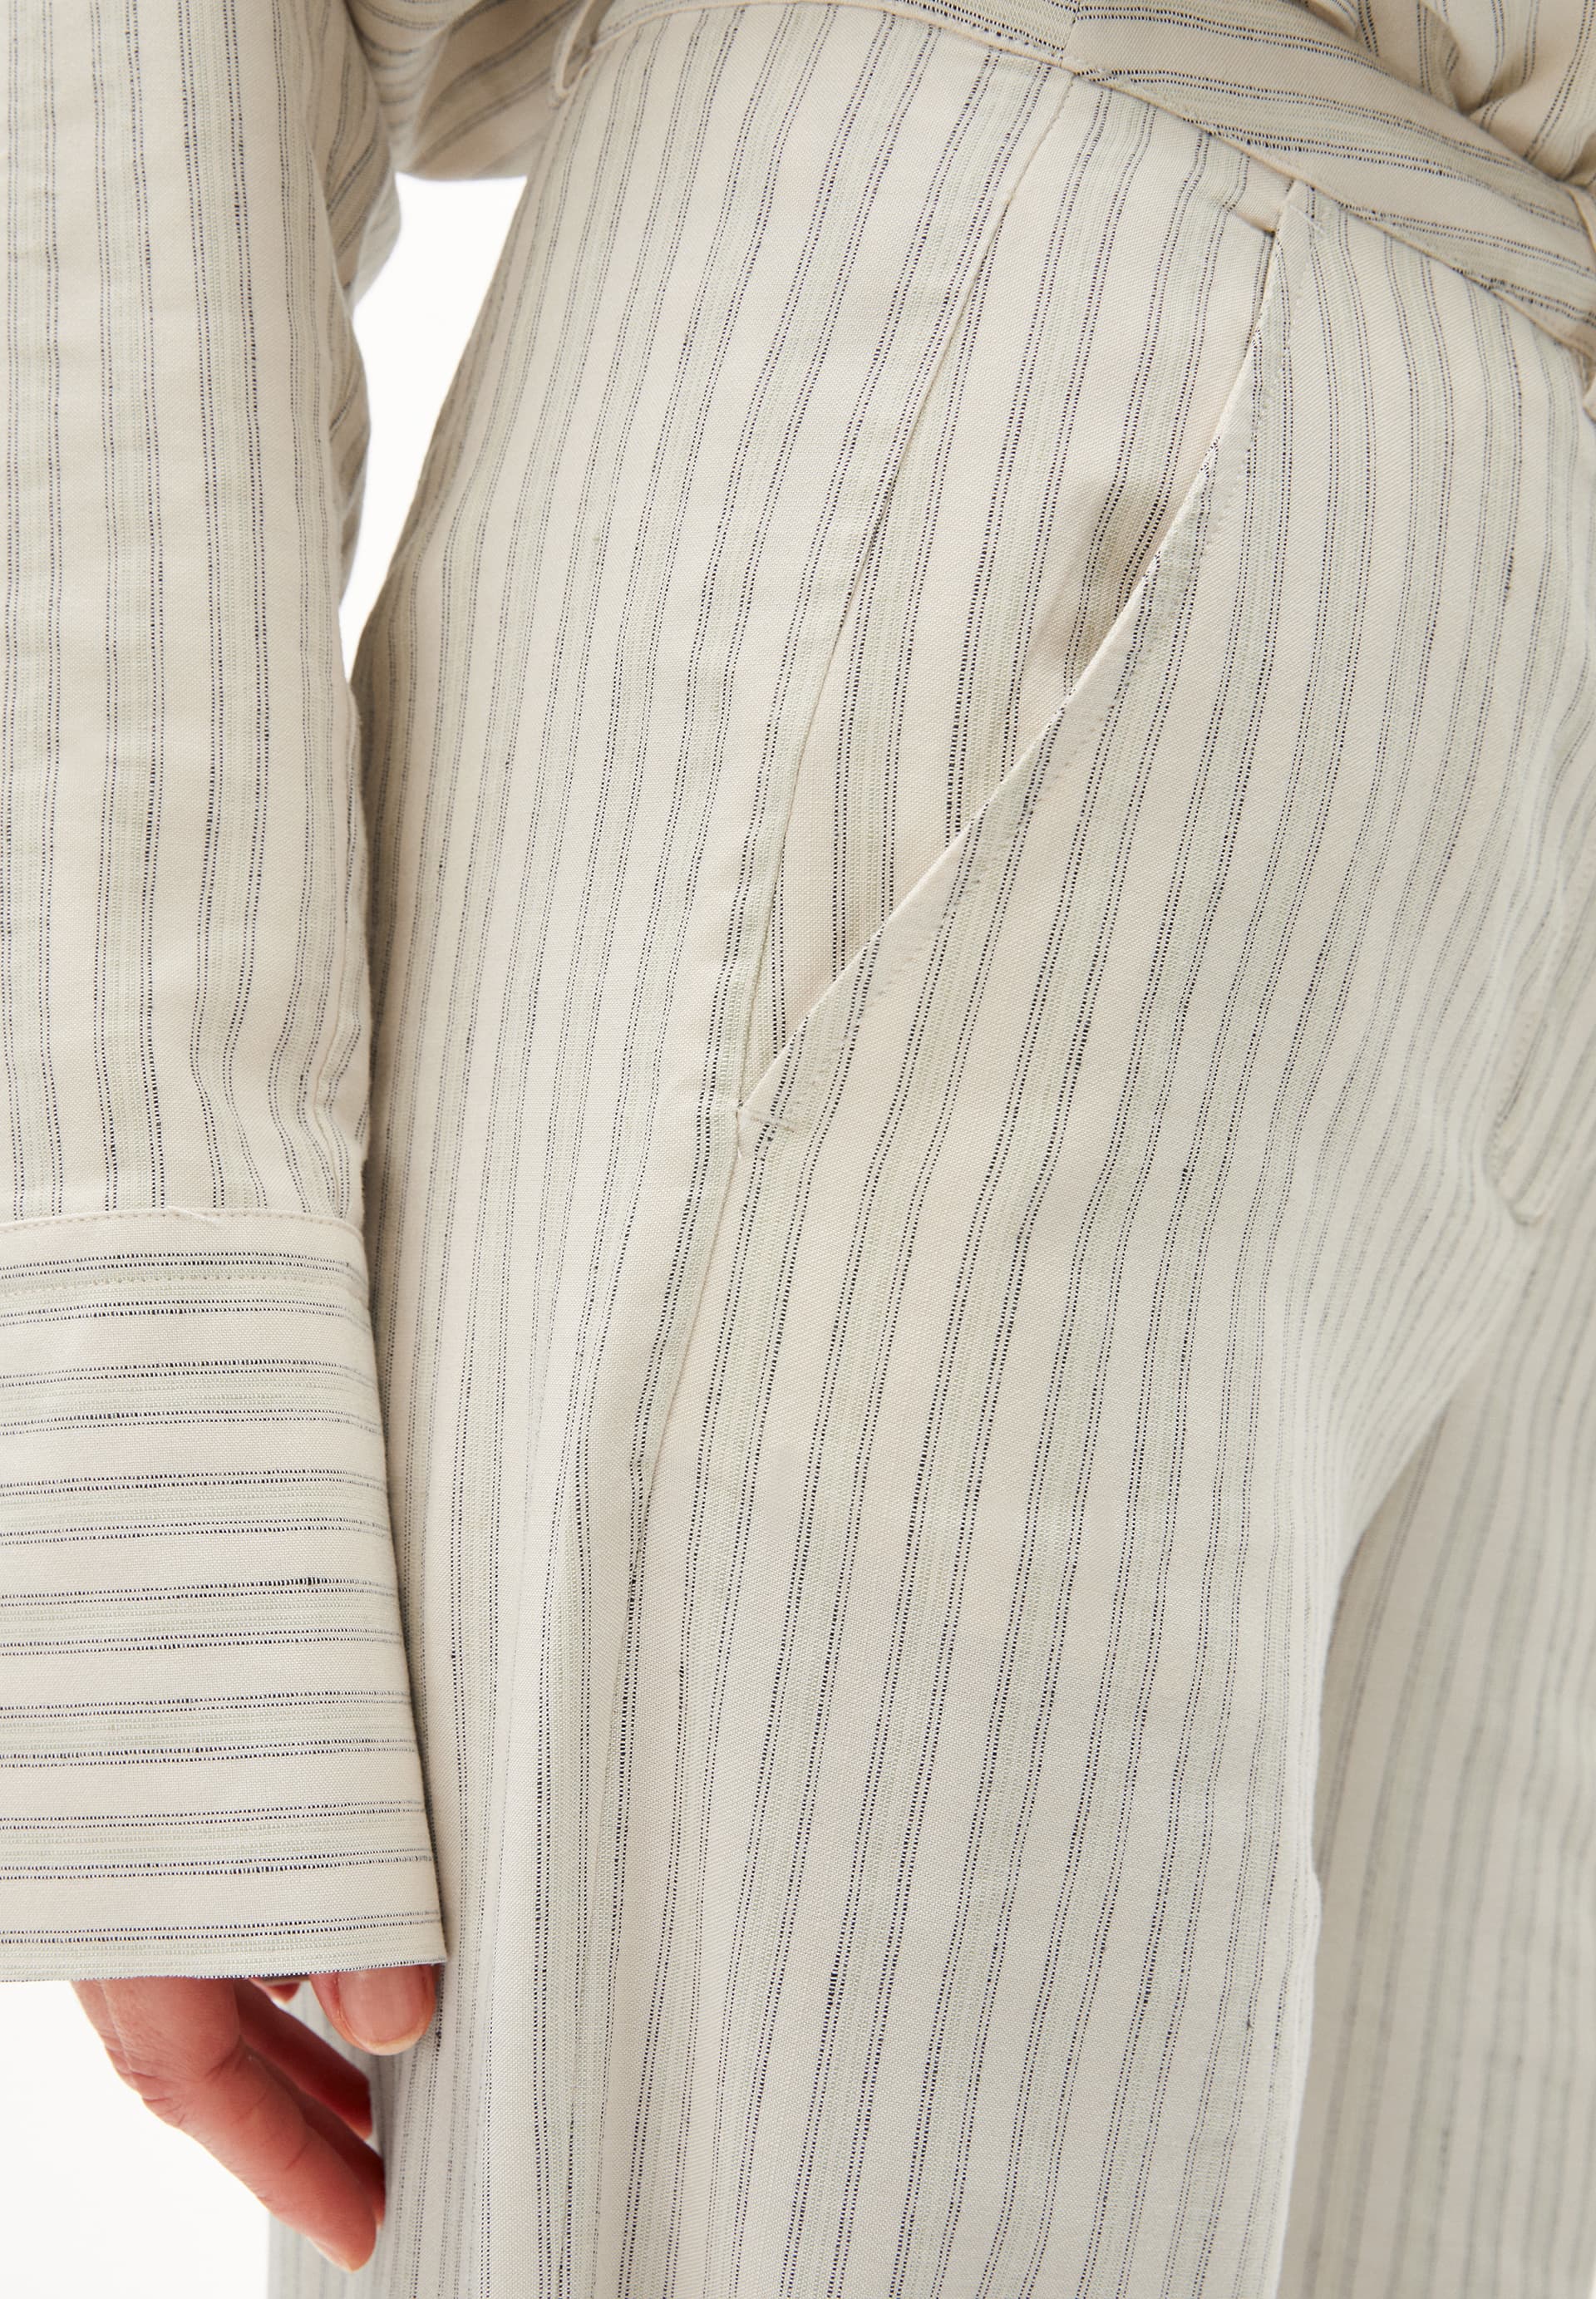 CAARUNUS LINO STRIPES Woven Pants made of Linen-Mix